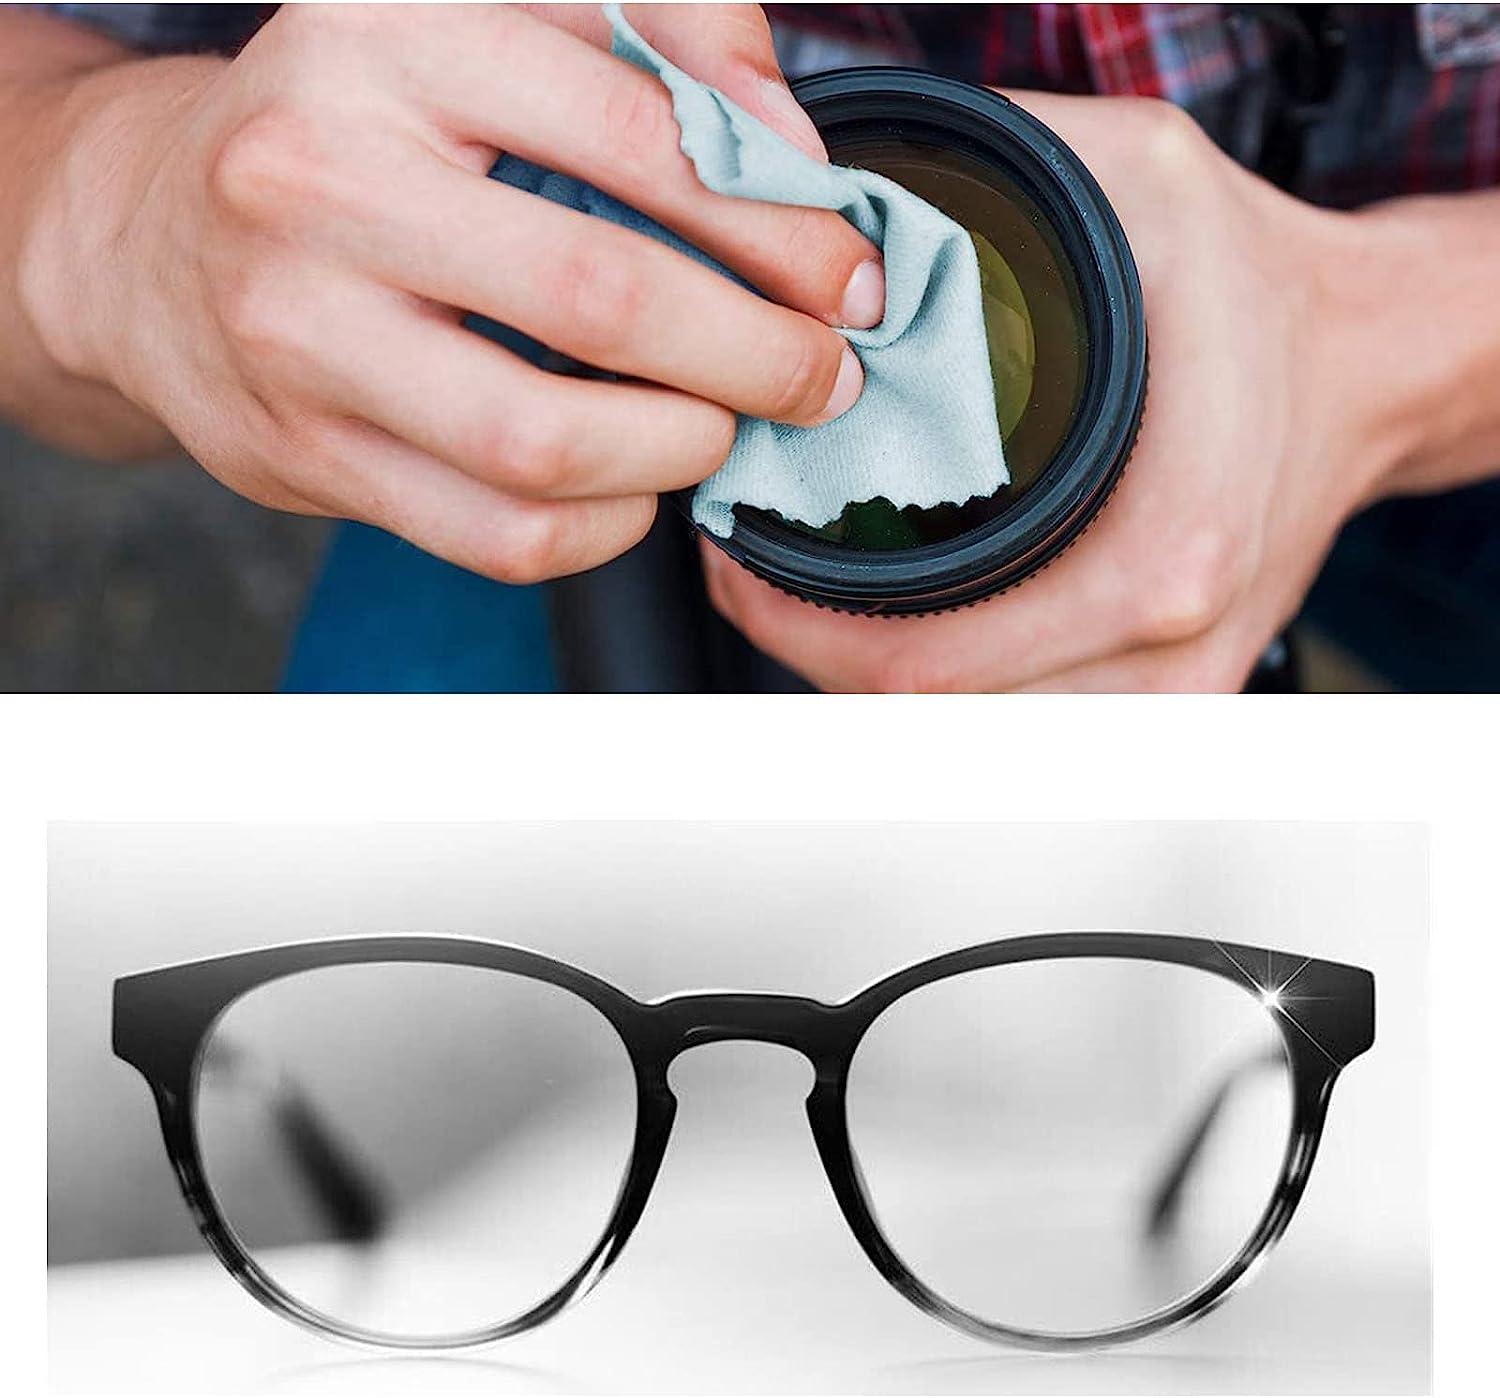  Lens Scratch Removal Spray for Eyeglass Windshield Glass Repair  Liquid, Eyeglass Glass Scratch Repair Spray, Lens Scratch Remover Glasses  Cleaner Spray Screen Cleaner Tools for Sunglasses (3Pcs) : Health &  Household